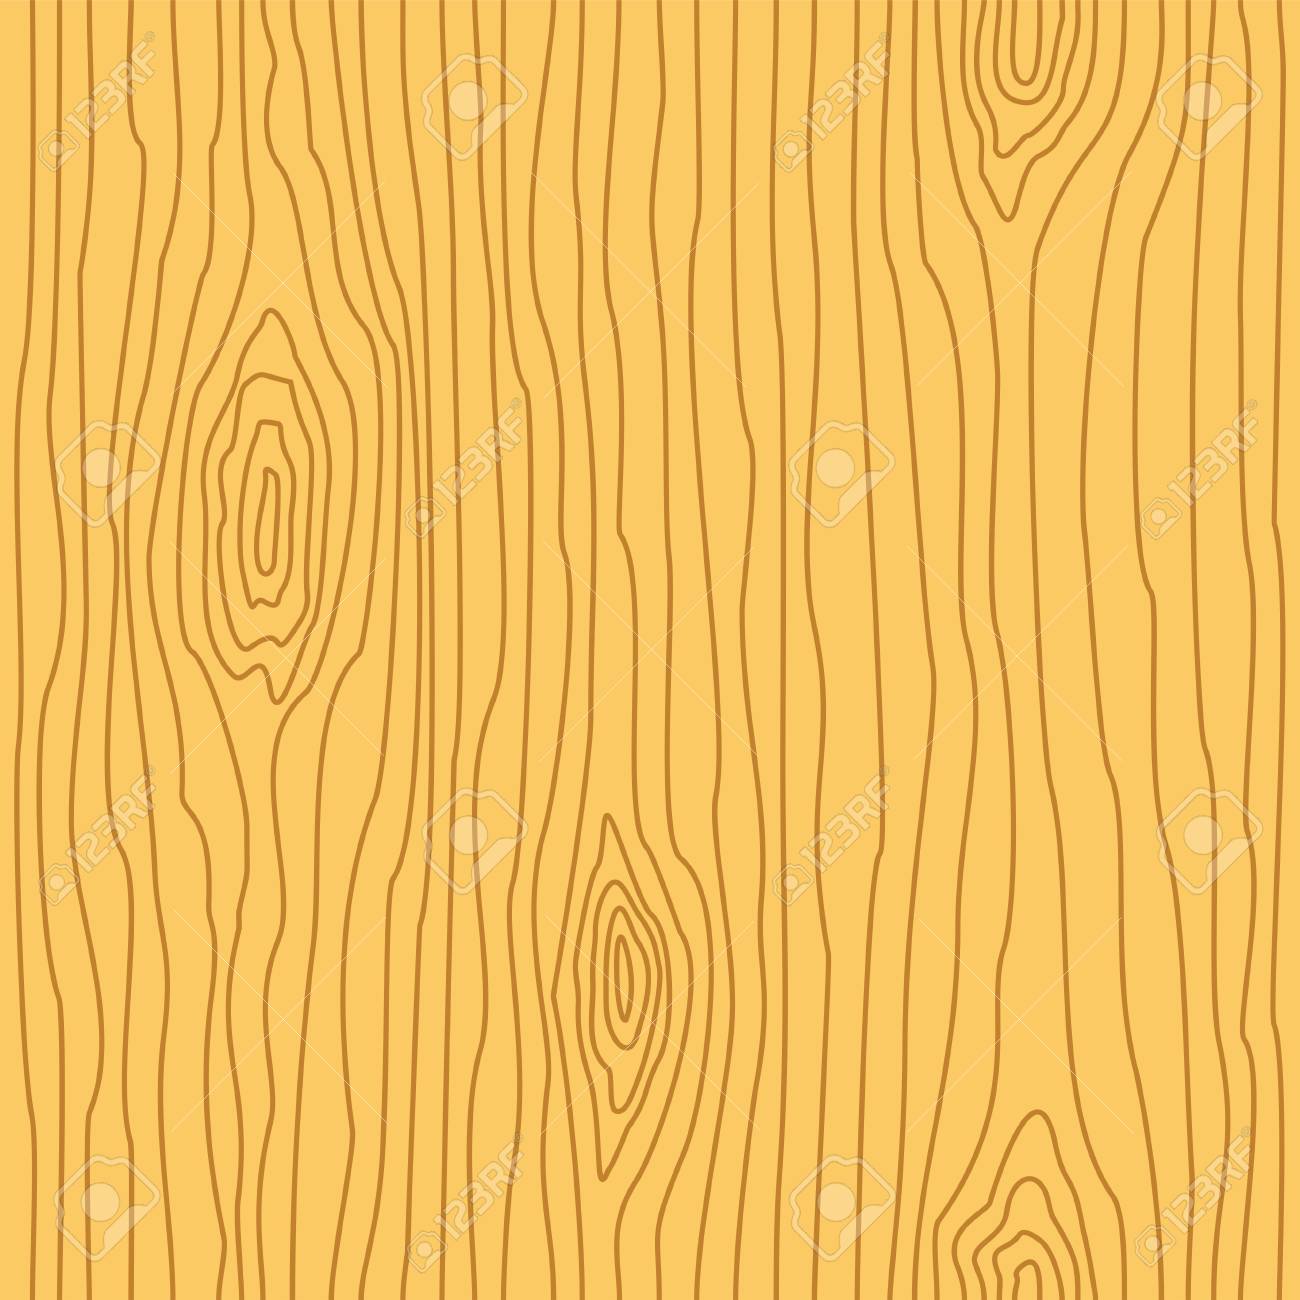 wood texture pattern illustrator download